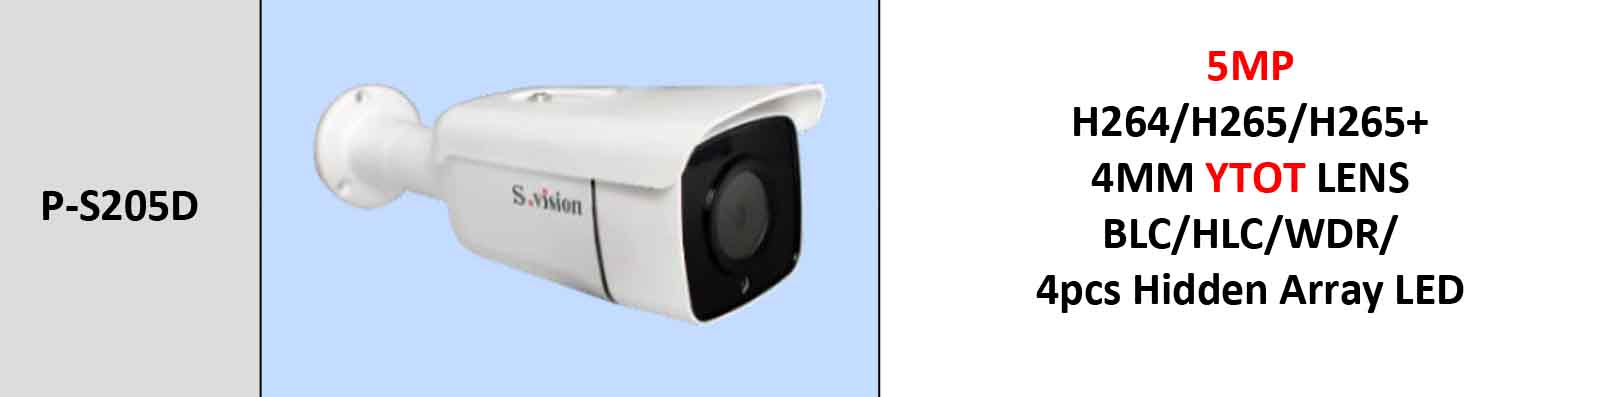 مشخصات دوربین مداربسته بولت اس ویژن مدل Svision P-S205D 